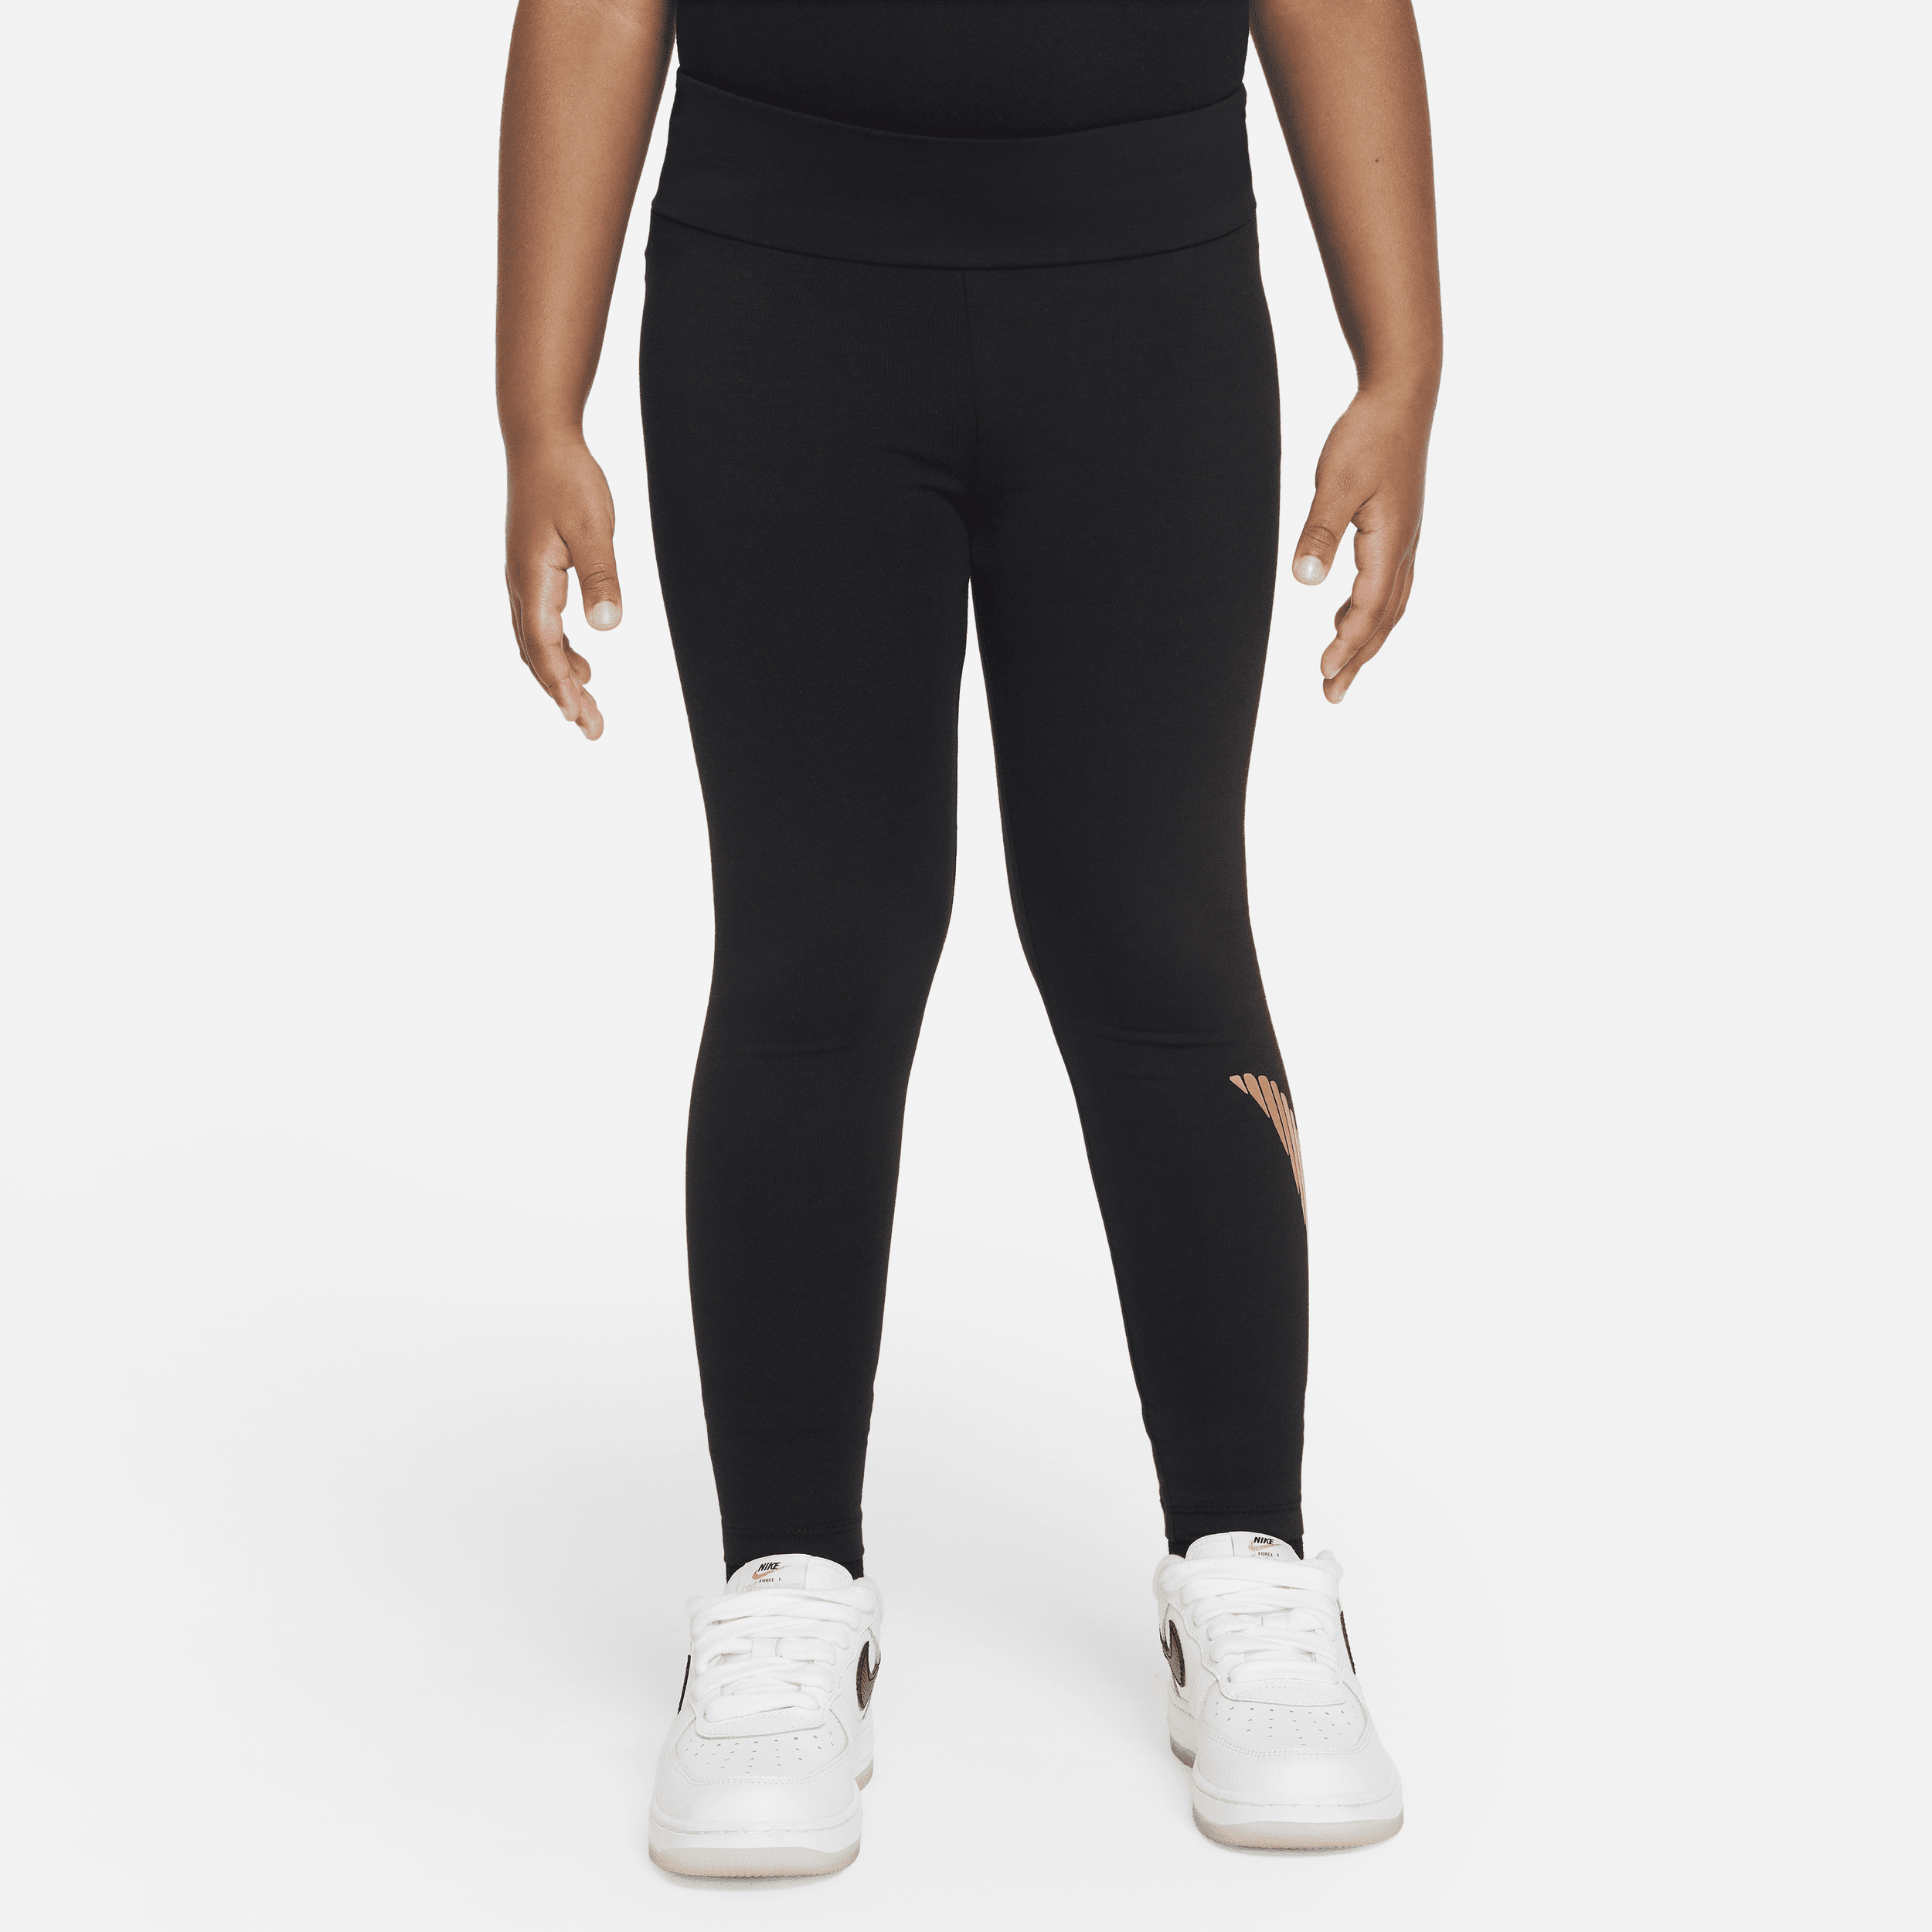 Leggings Nike Sportswear Shine – Bambino/a - Nero